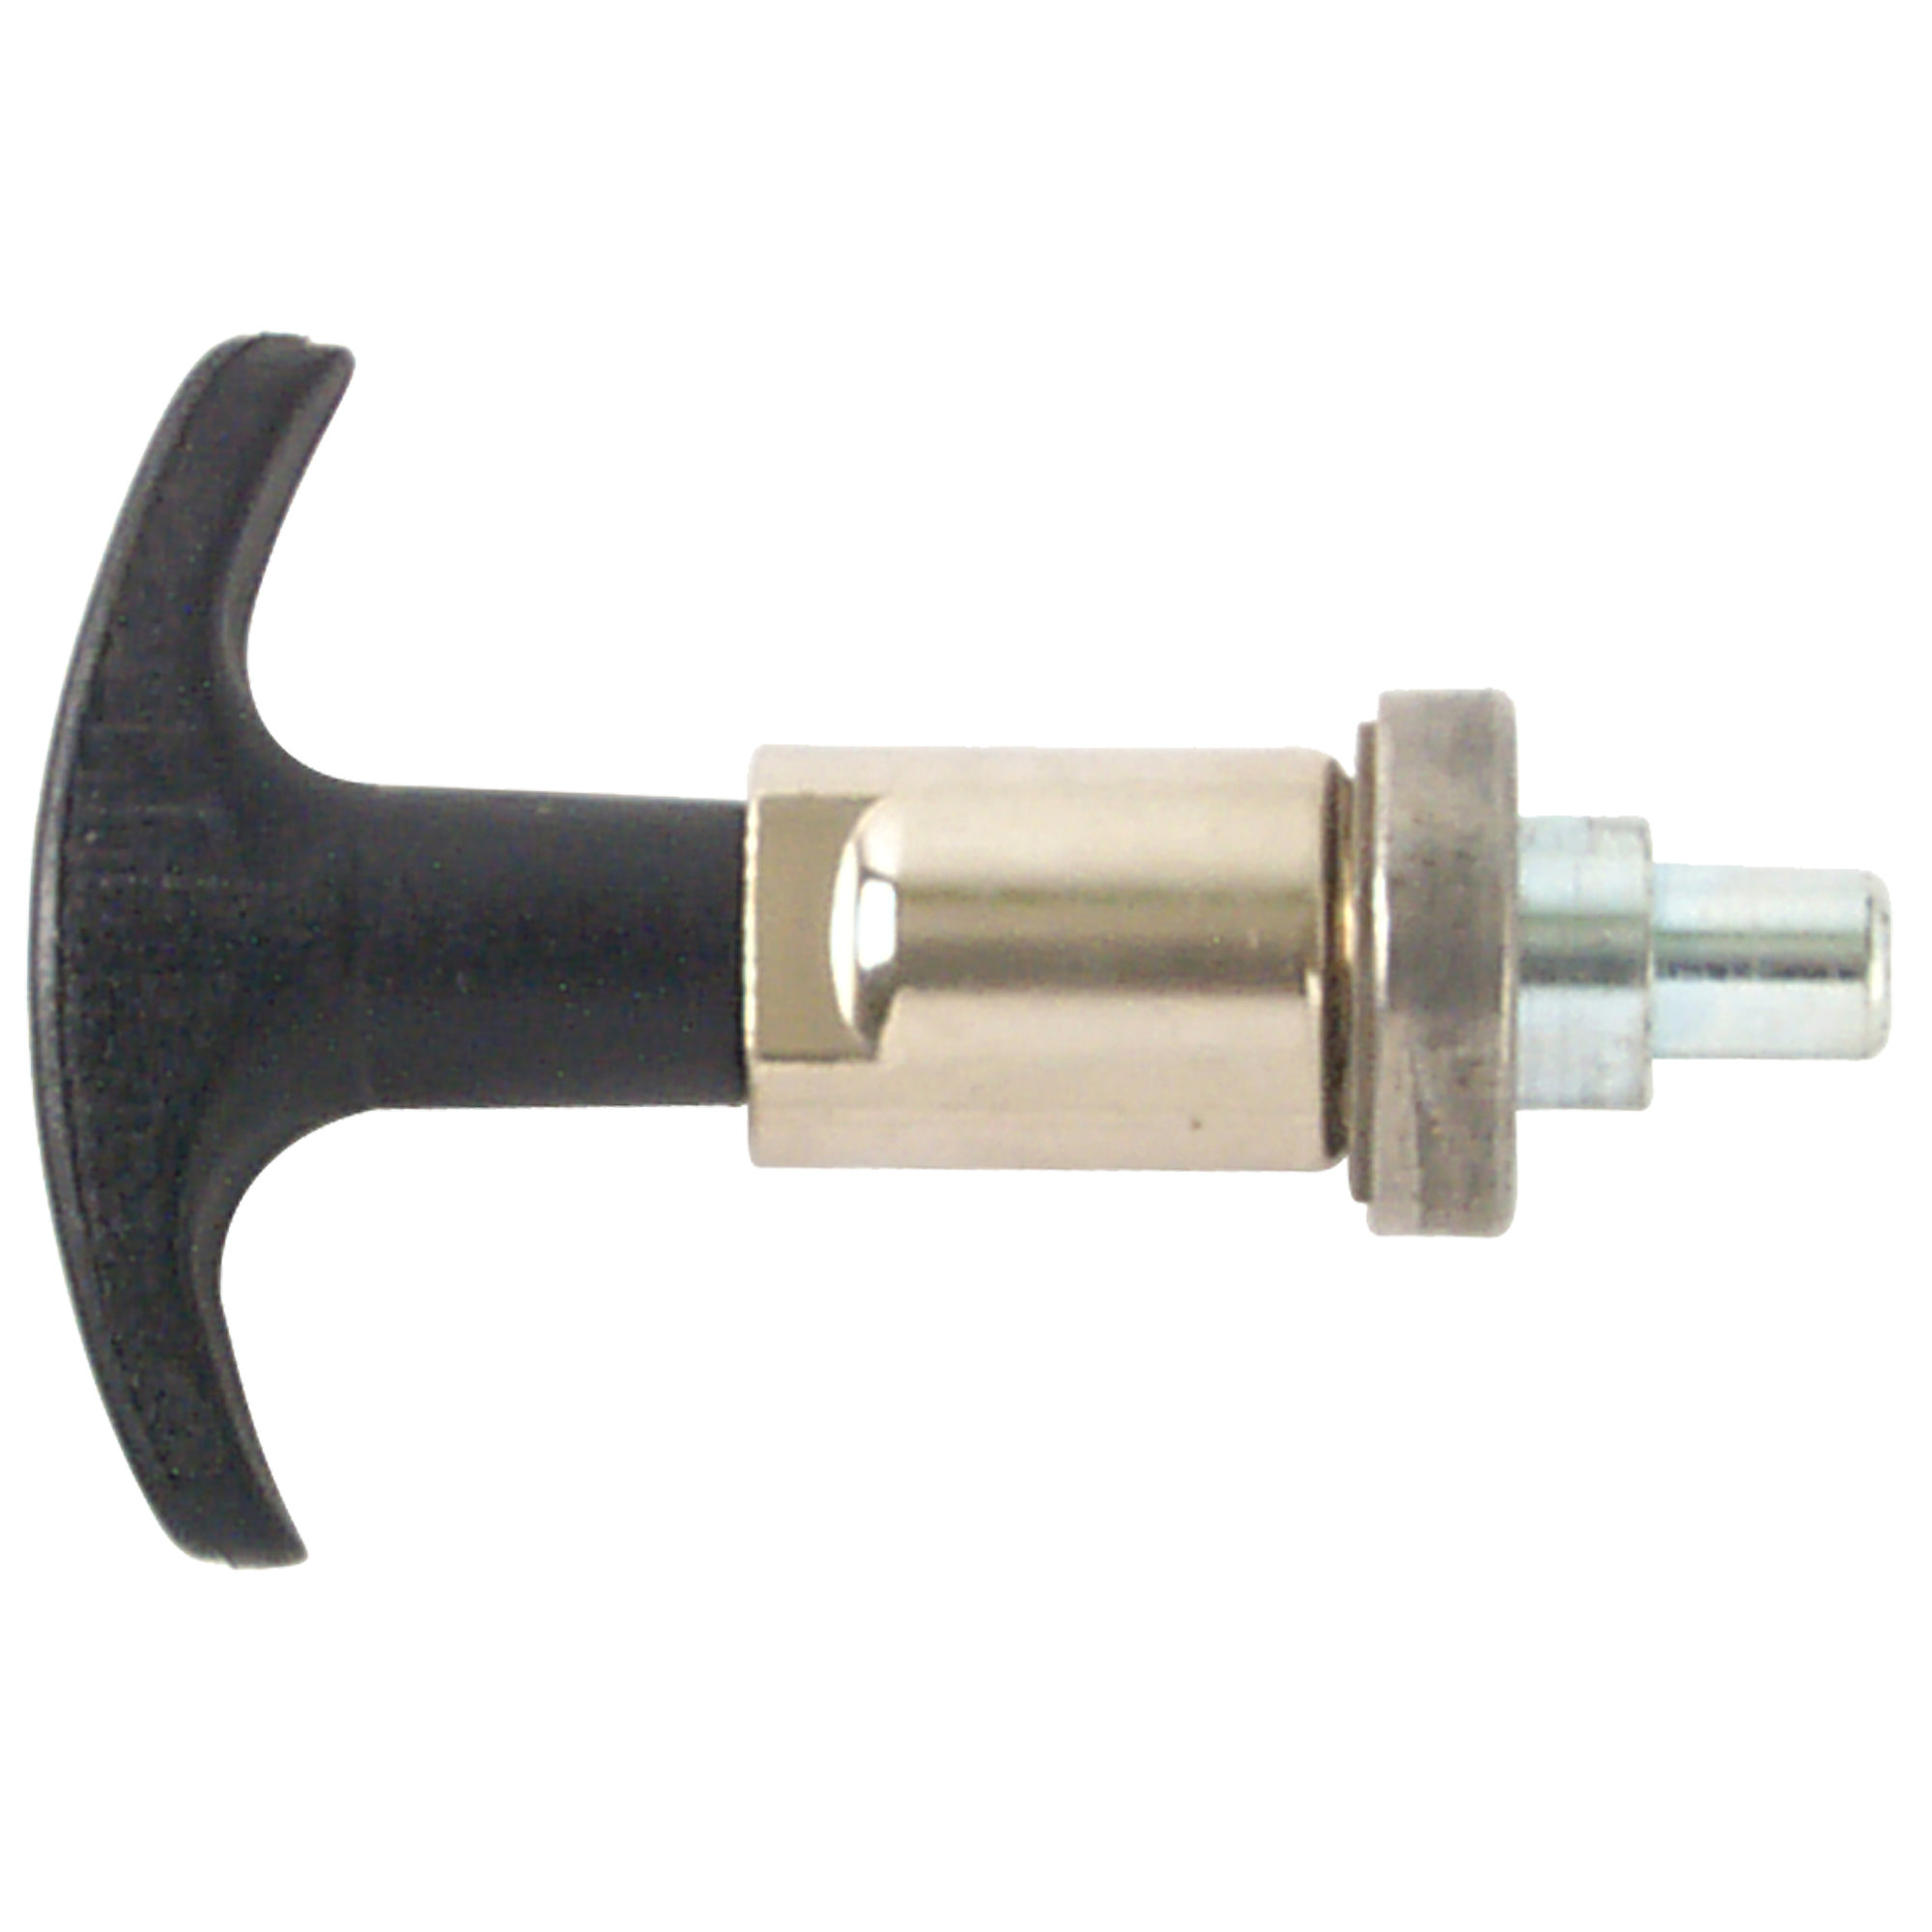 T-Handle Pop Pin with Nut, 5/16" Diameter